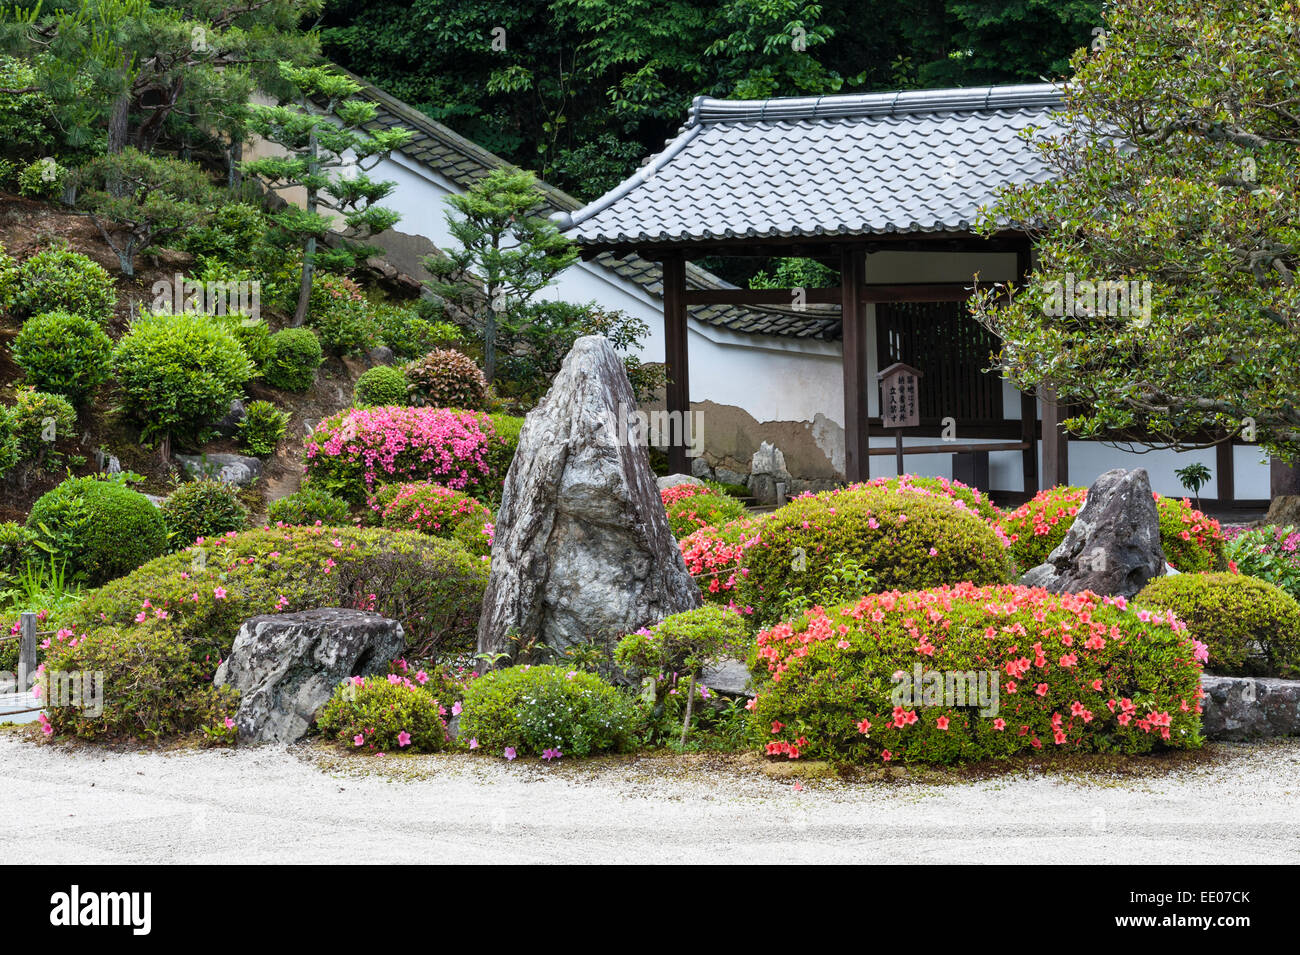 Kaisan-do zen temple, Tofuku-ji, Kyoto, Japan. A rock in the temple garden, surrounded by flowering azaleas Stock Photo